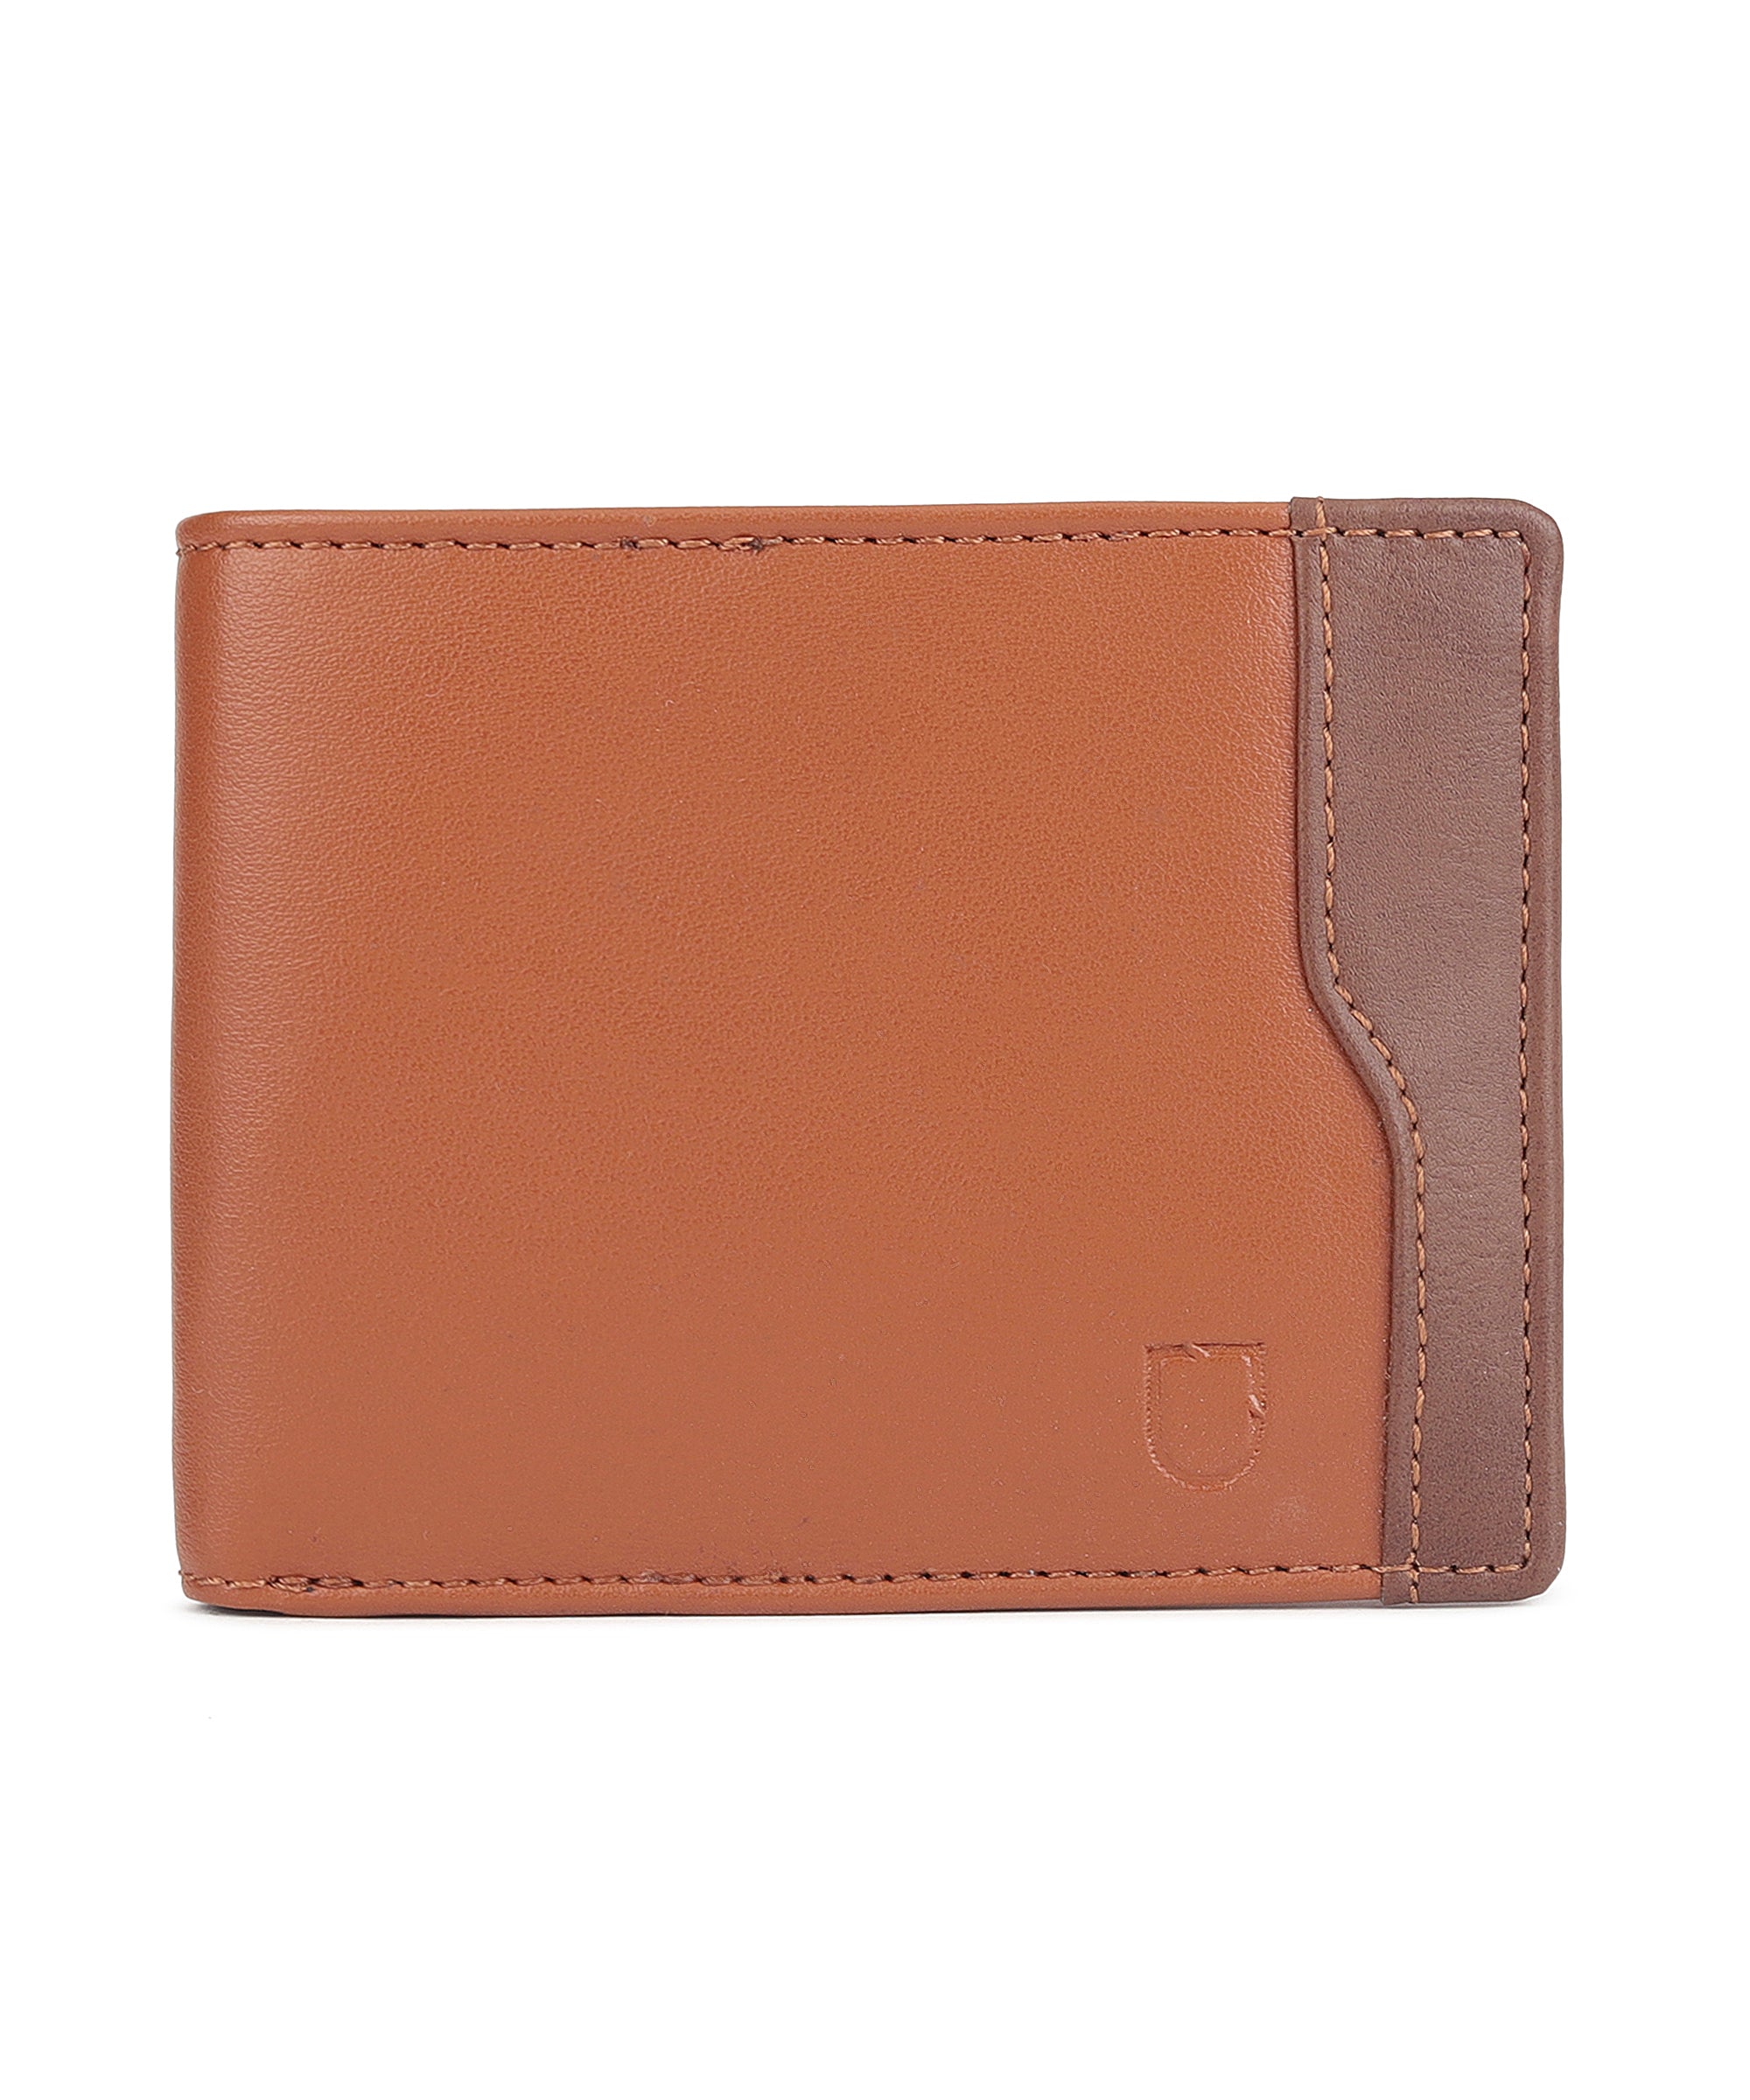 Urbano Fashion Men's Tan, Brown Casual, Formal Leather Wallet-4 Card Slots